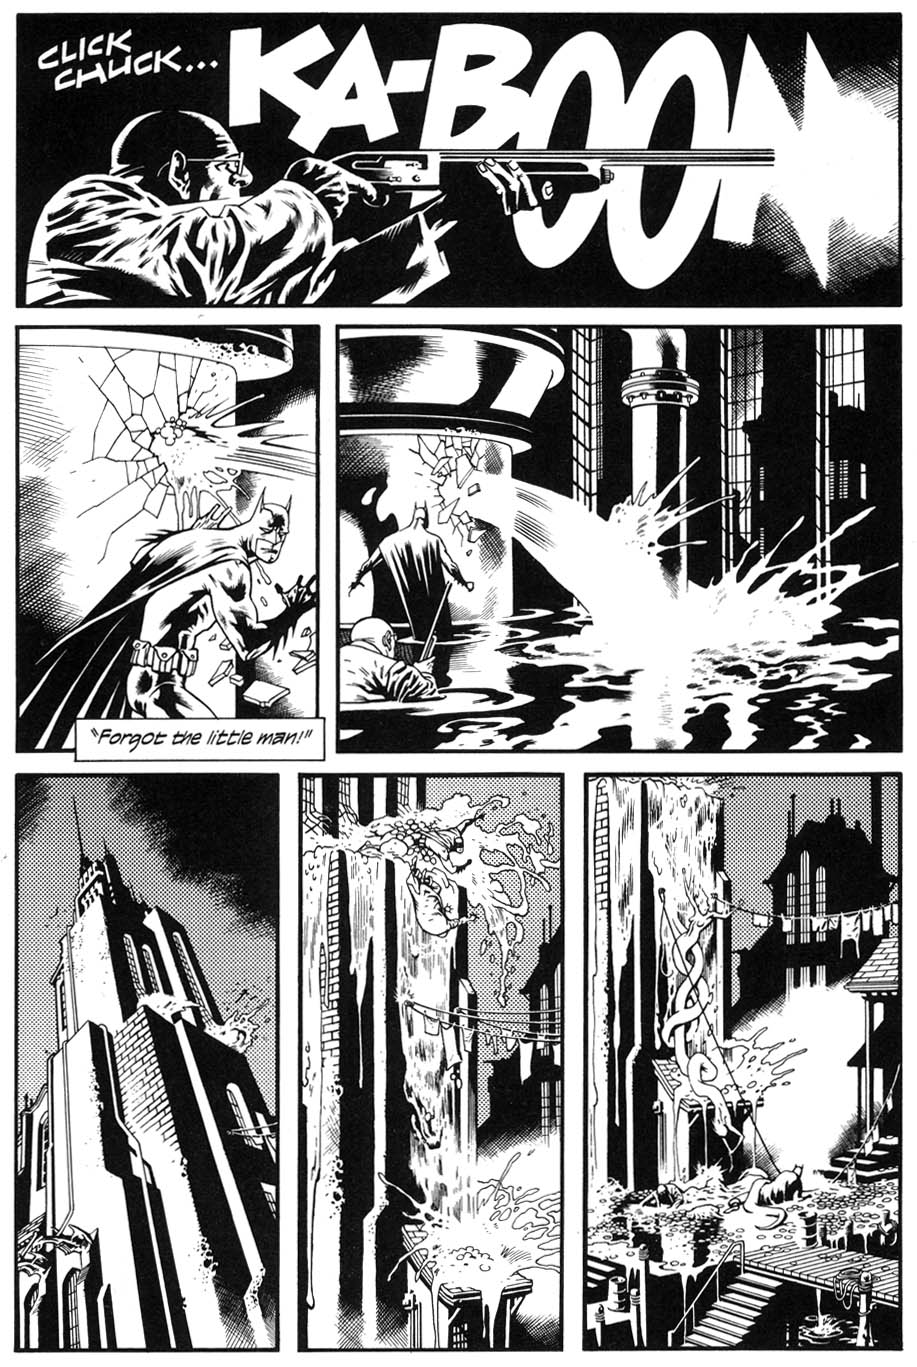 Batman - Black And White 4, Part 1 of 2